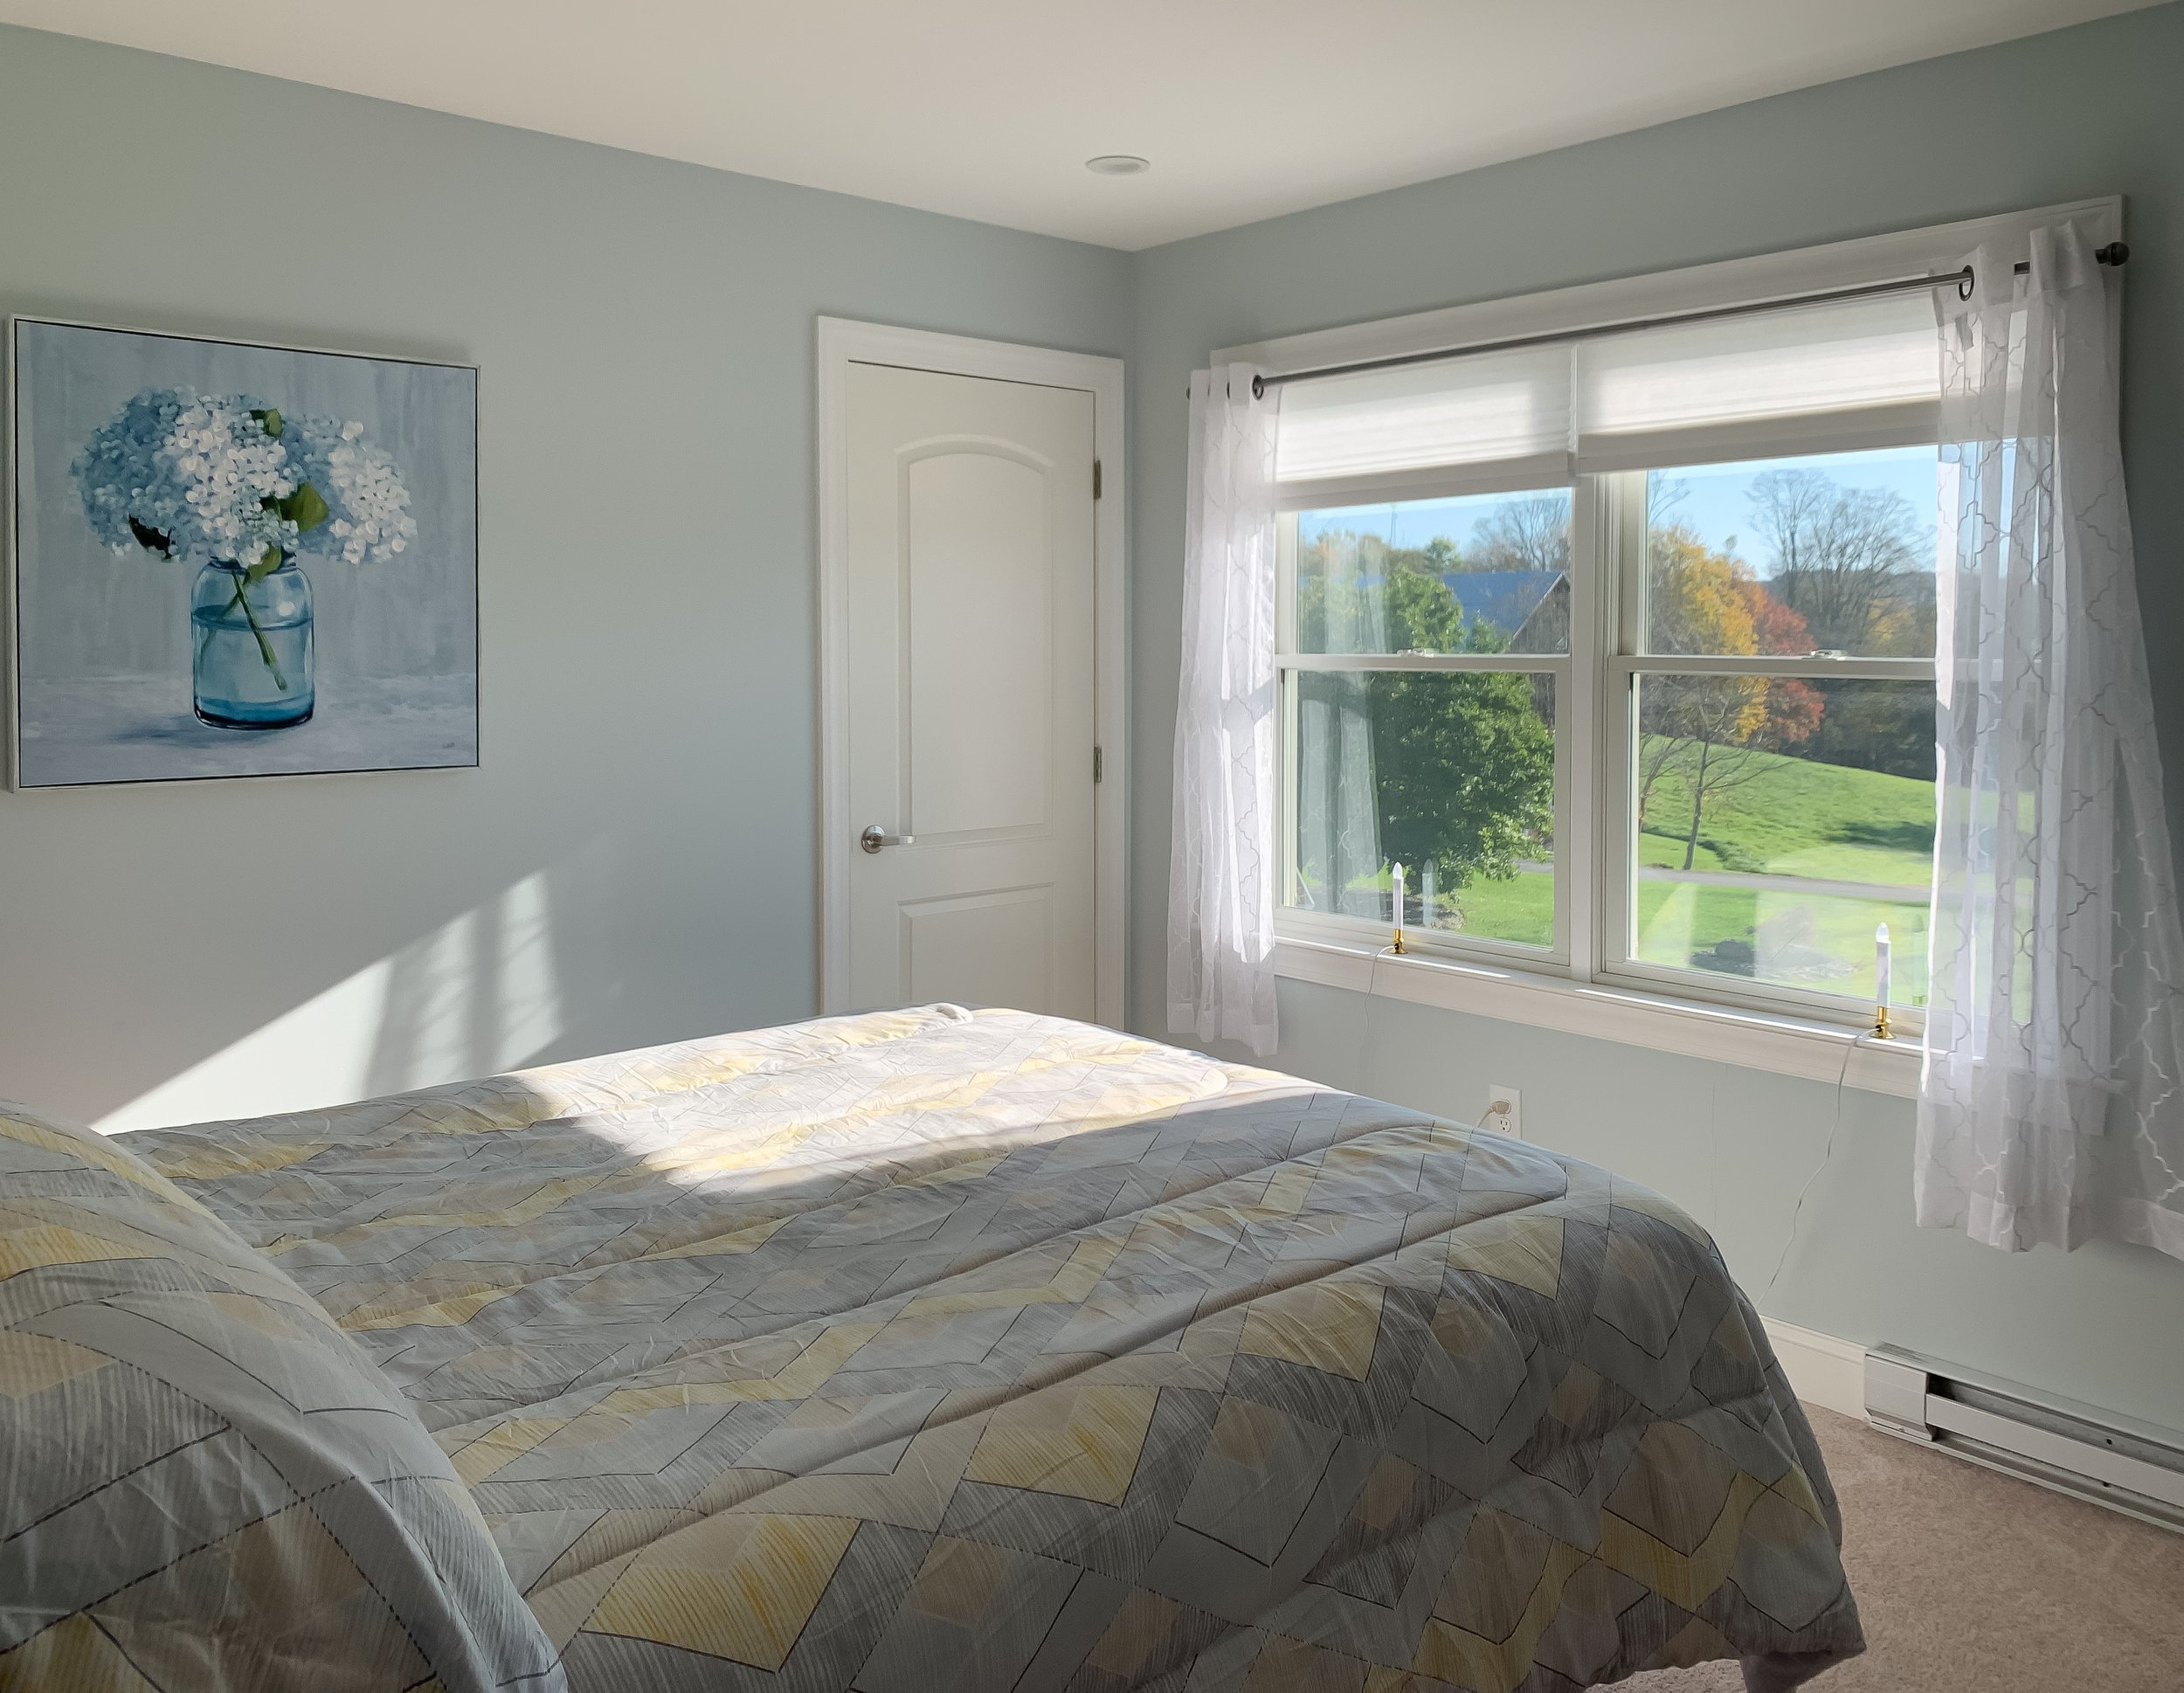 Guest bedroom in modular lakehouse NEPA.JPEG